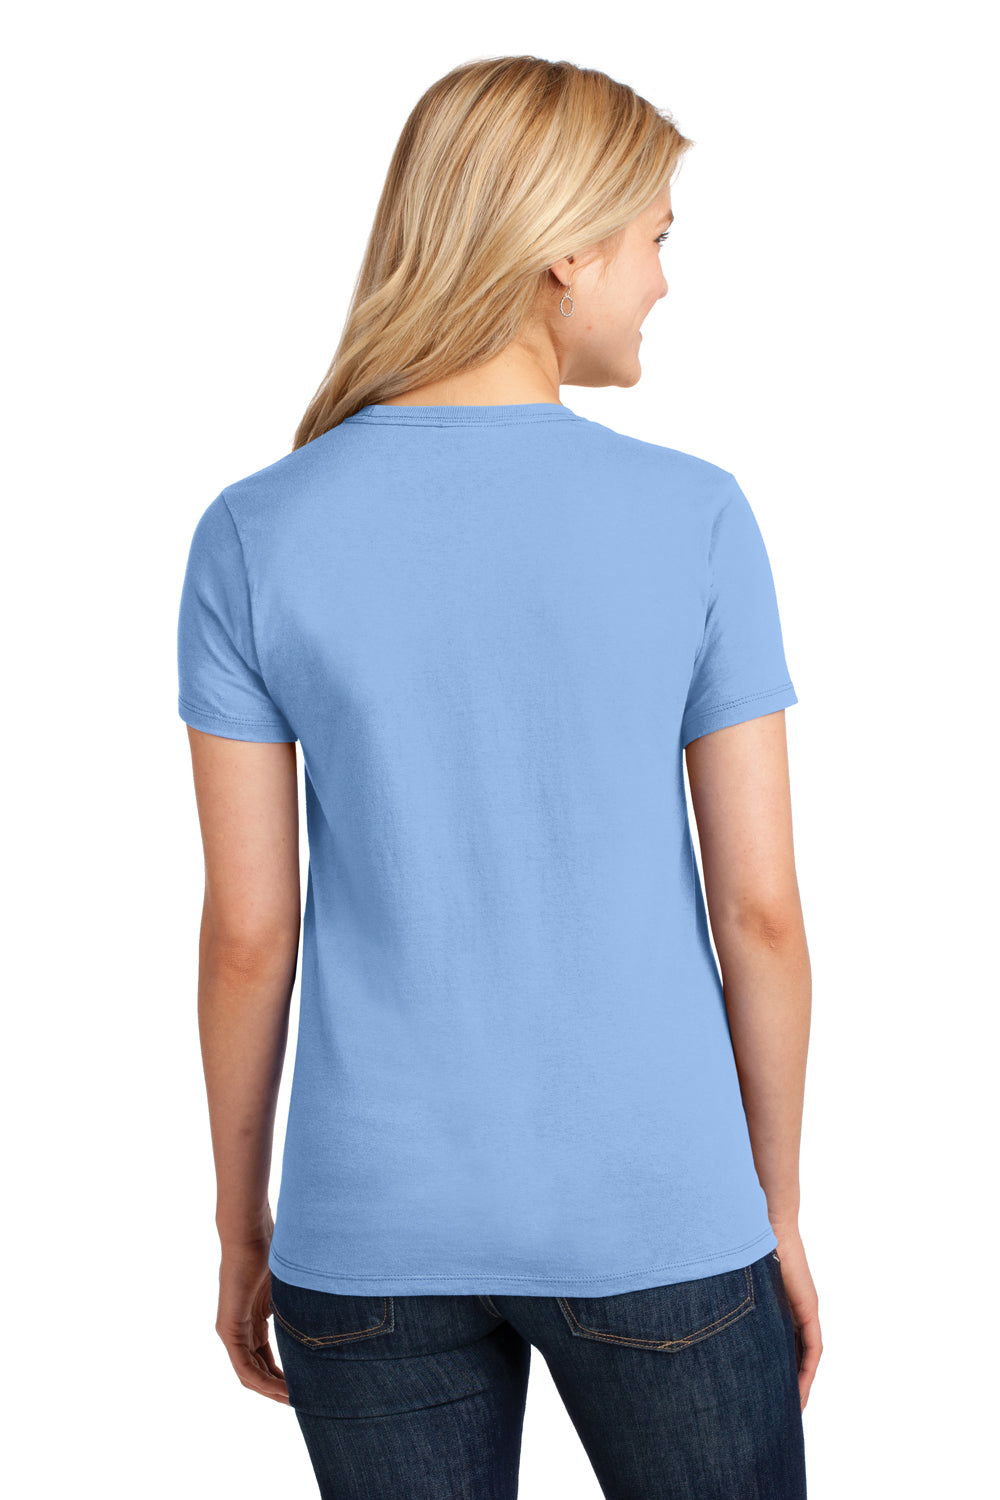 Port & Company LPC54 Womens Core Short Sleeve Crewneck T-Shirt Light Blue Back